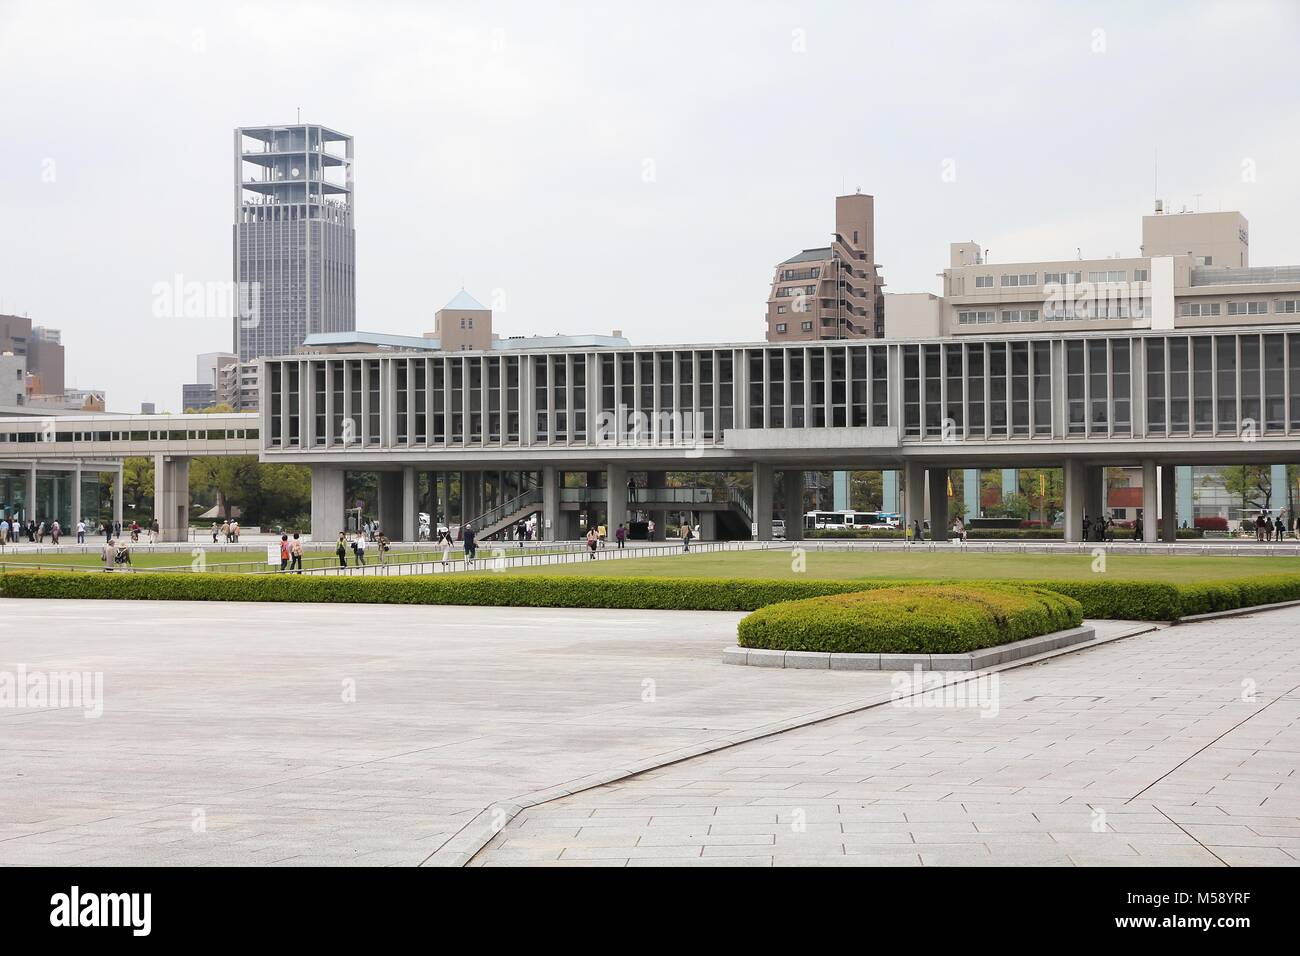 HIROSHIMA, JAPAN - APRIL 21, 2012: People visit Peace Memorial Museum in Hiroshima, Japan. It educates people about the infamous atomic bombing and wa Stock Photo